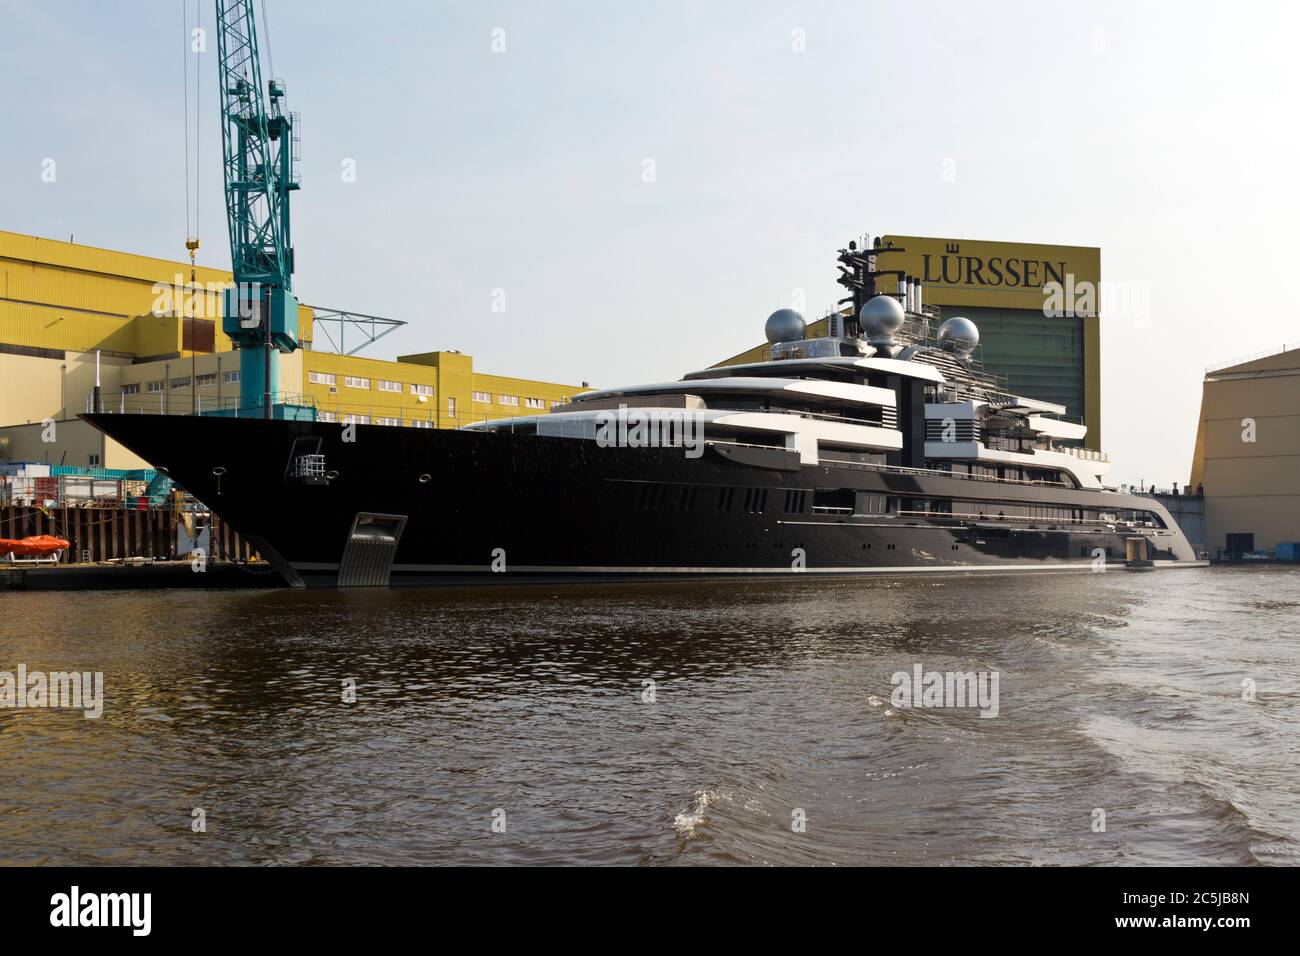 Luxury Mega Yacht at the Jetty of Lürssen Shipyard, Vegesack, Bremen, Germany Stock Photo